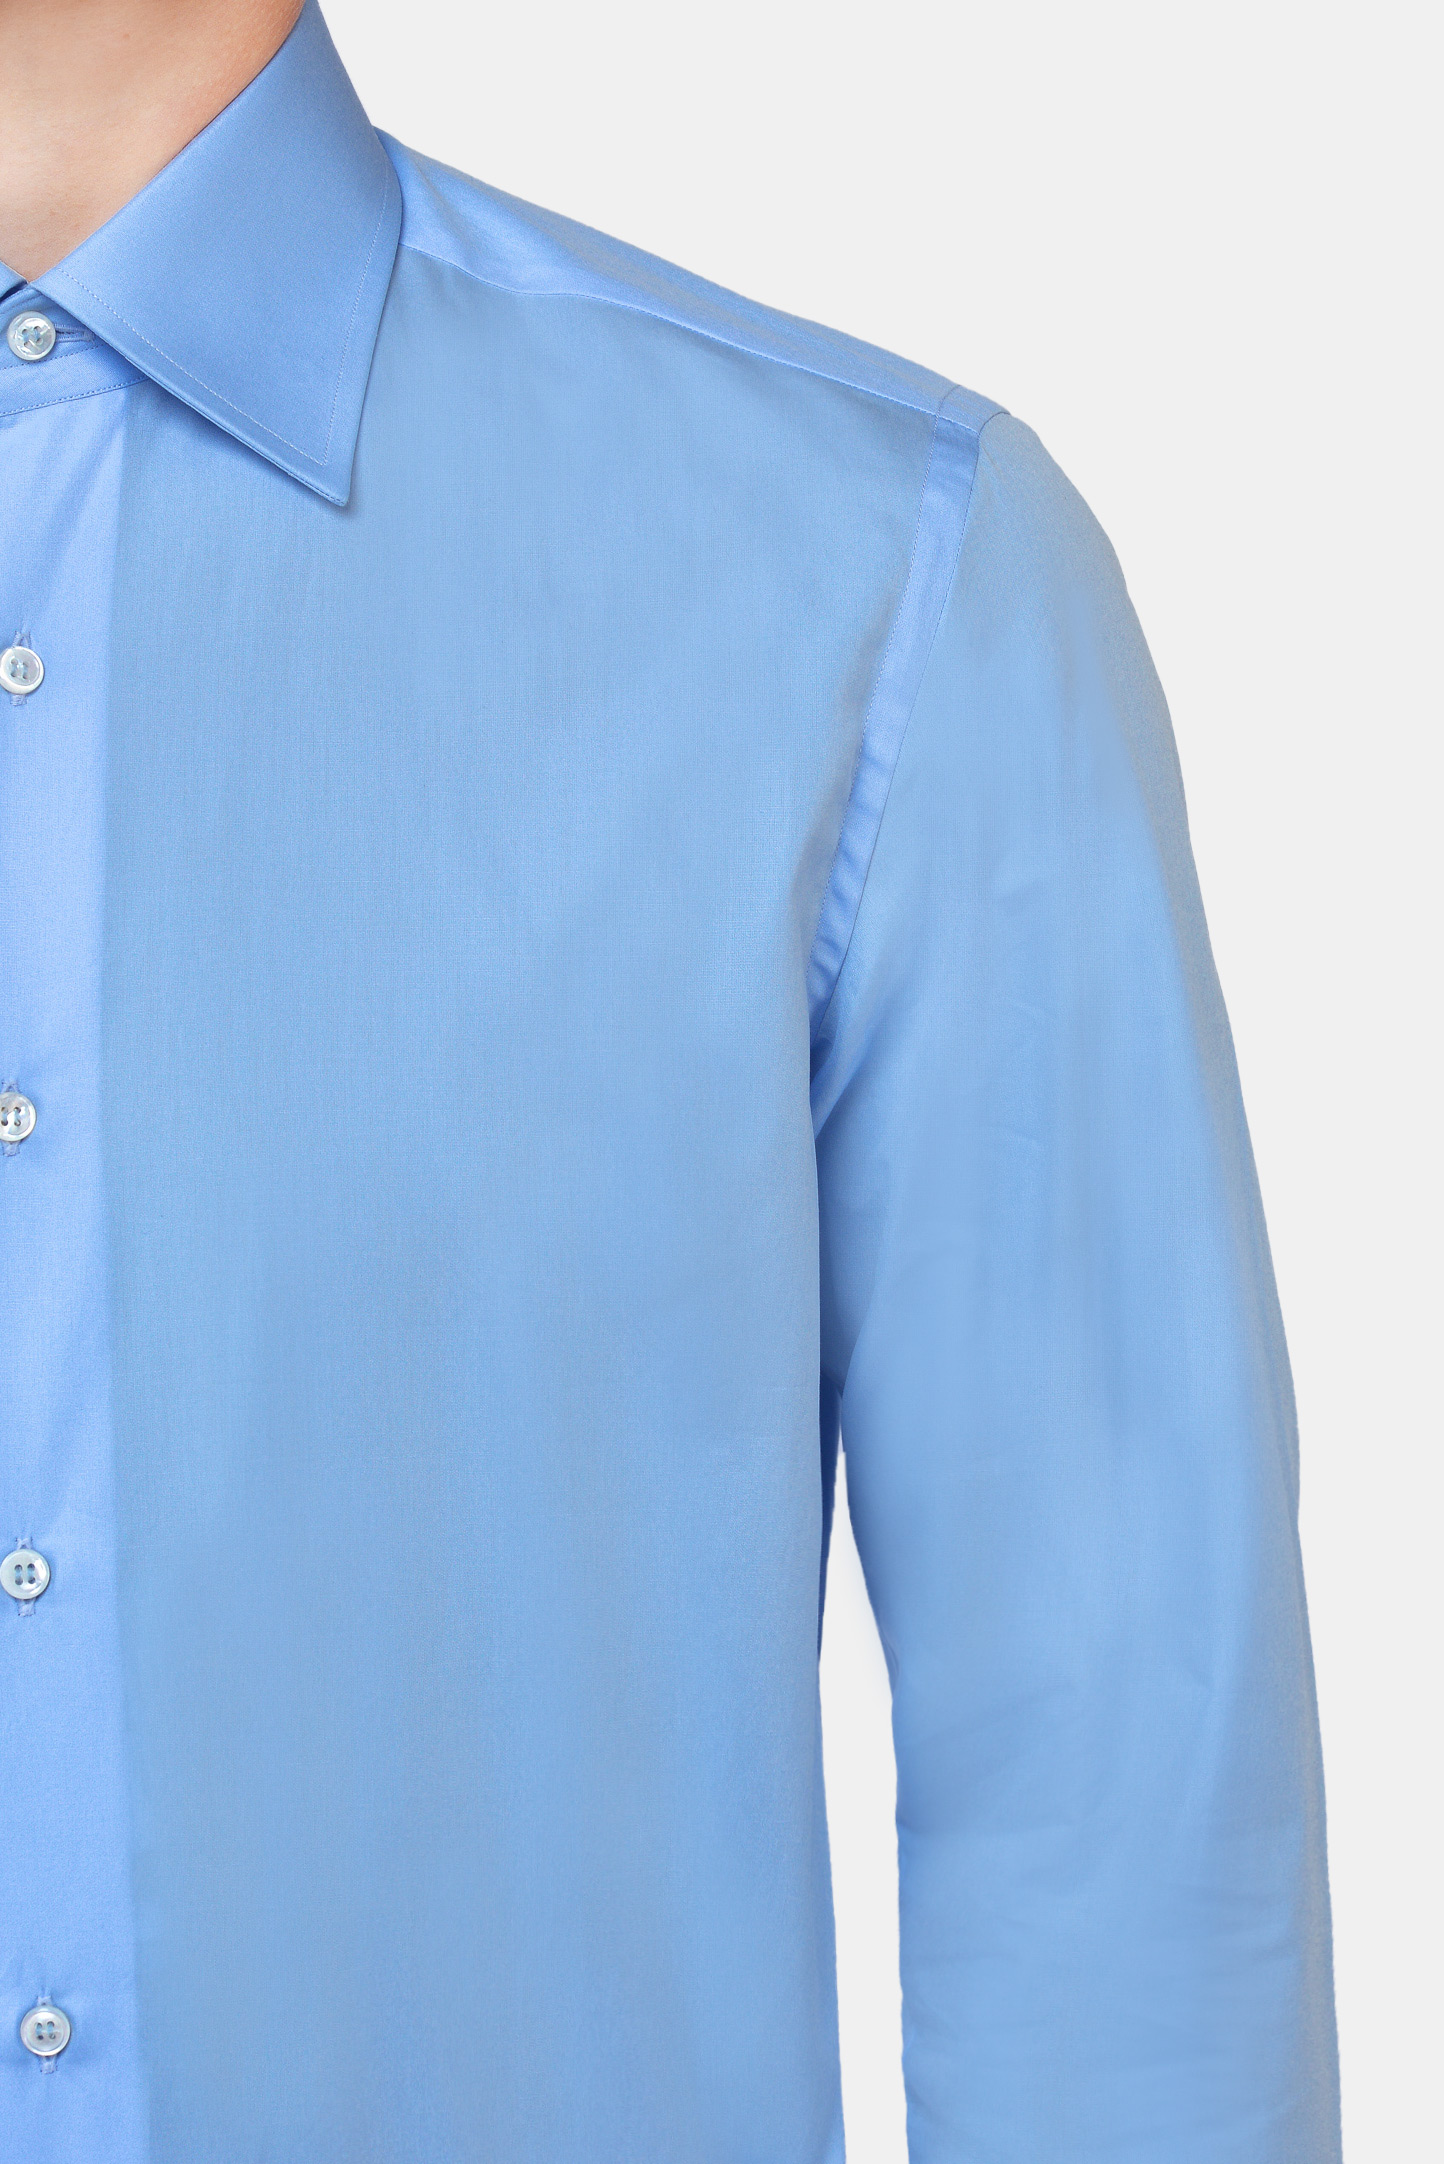 Рубашка BRIONI RCL02Z PZ016, цвет: Голубой, Мужской